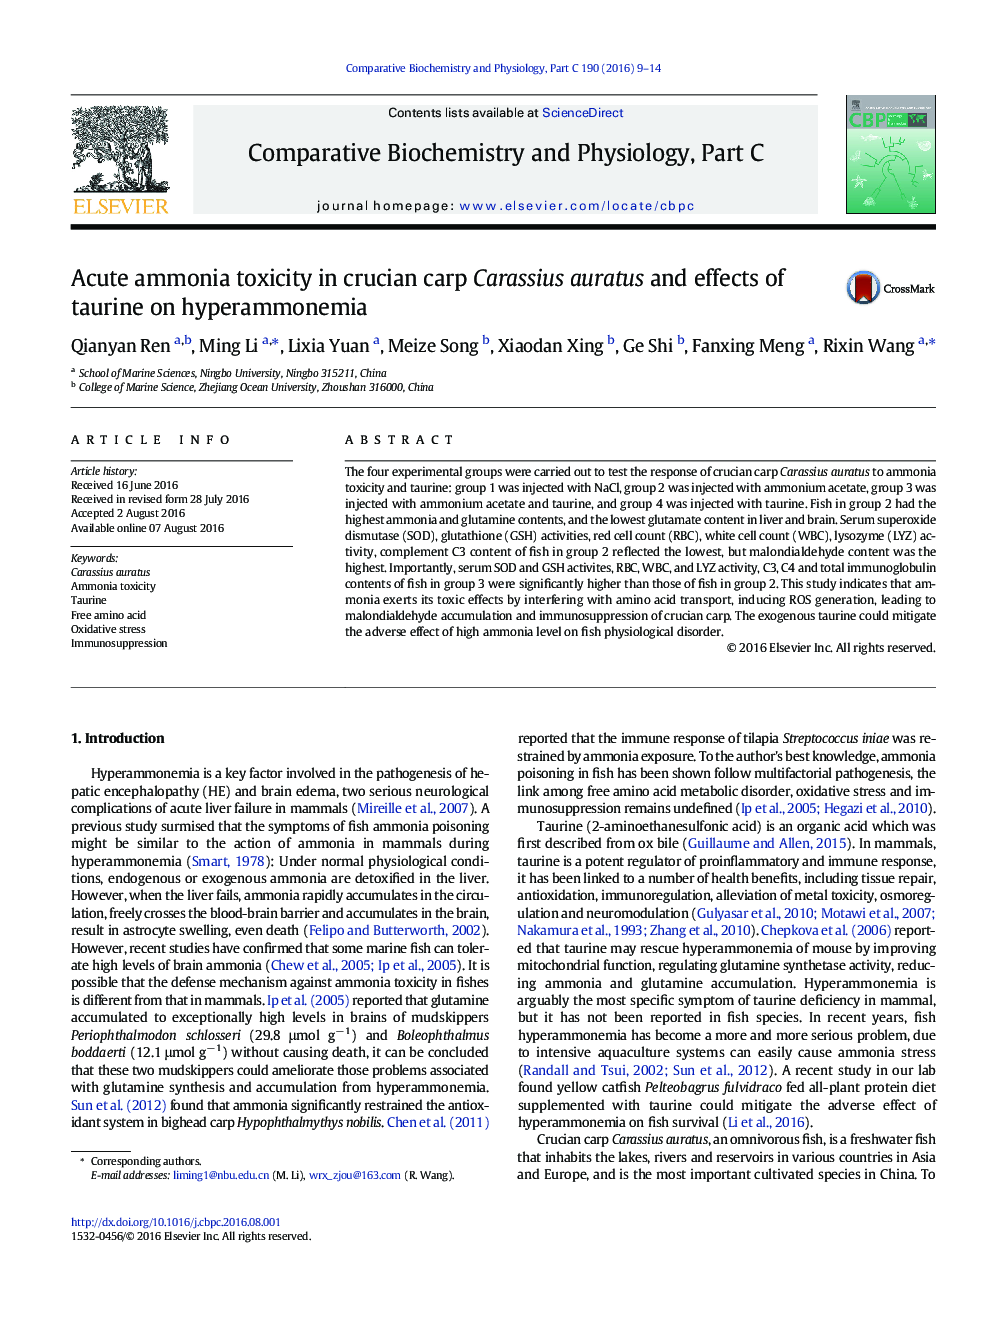 Acute ammonia toxicity in crucian carp Carassius auratus and effects of taurine on hyperammonemia